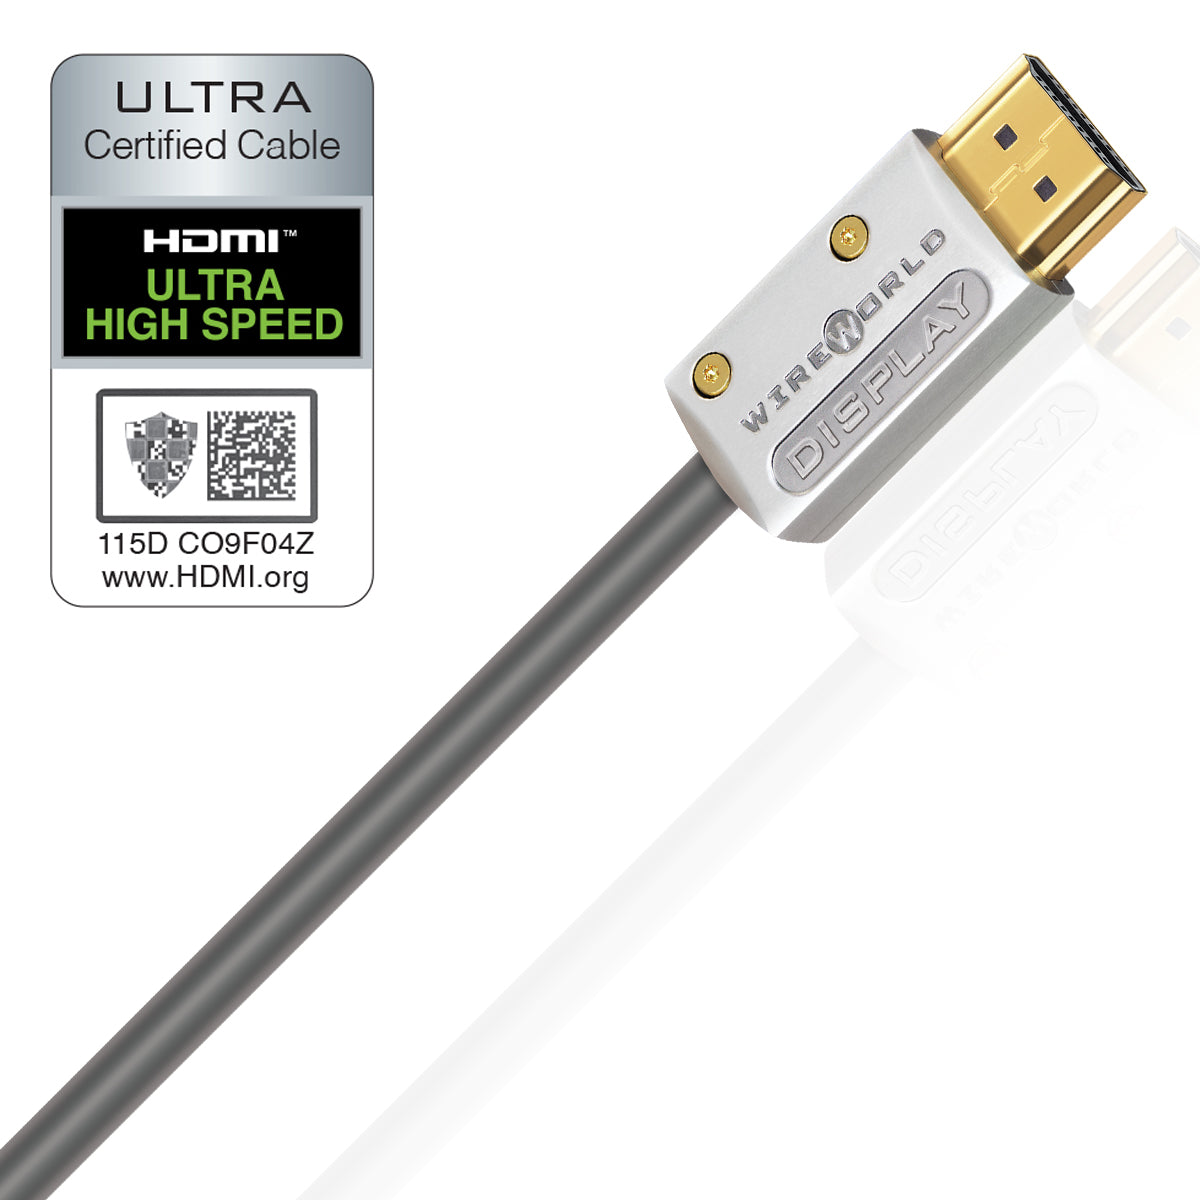 Stellar™ Fiber Optic HDMI Cable @ 20% OFF – Closeout